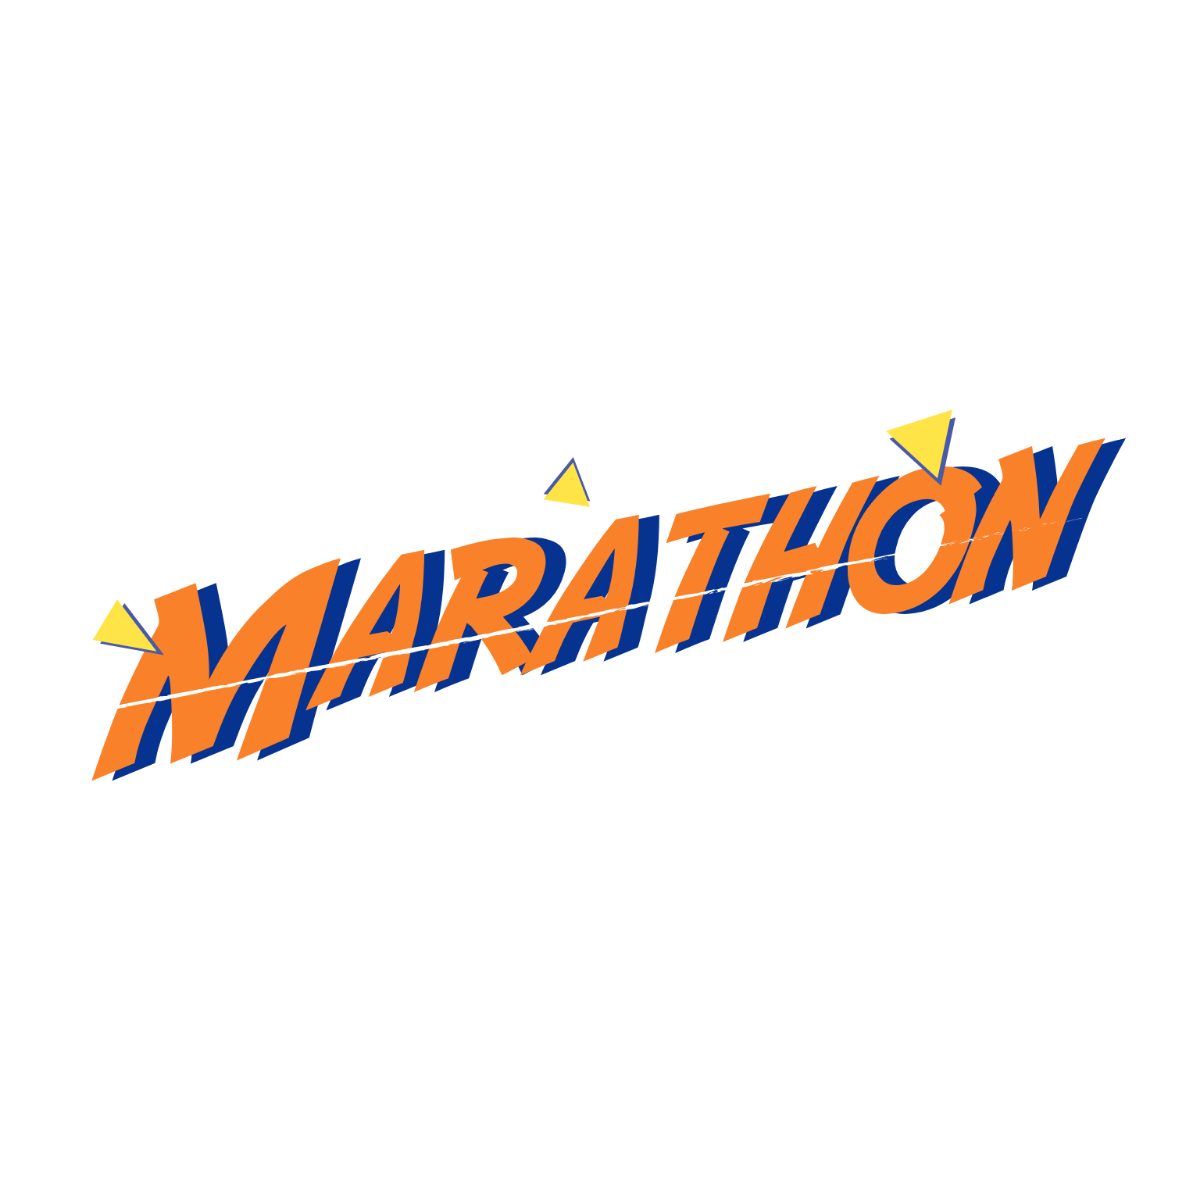 Free Marathon Text Effect Template